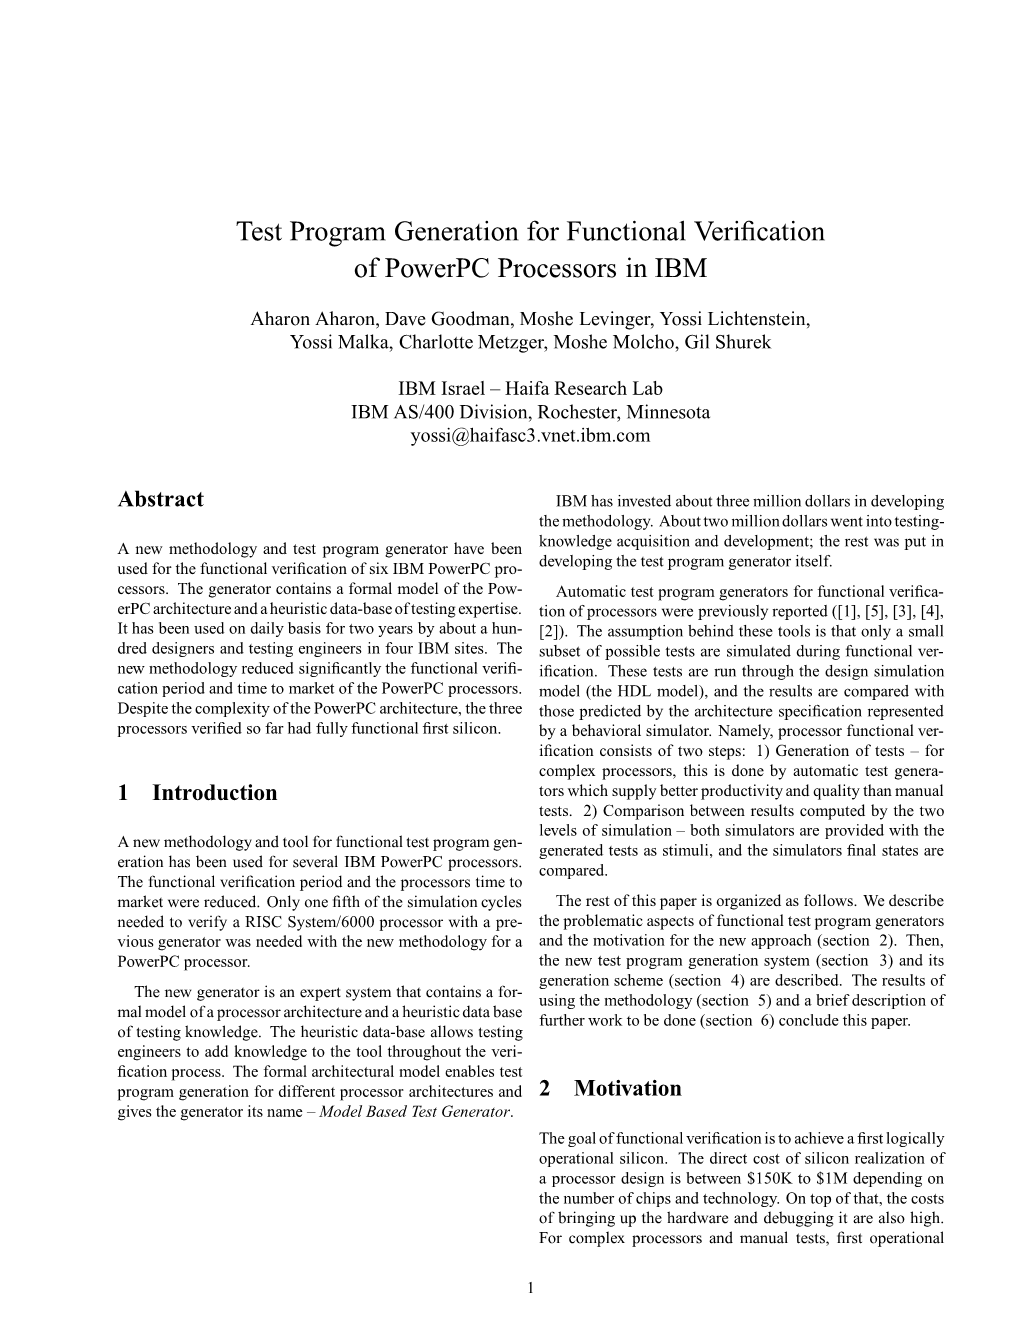 Test Program Generation for Functional Verification of Powerpc